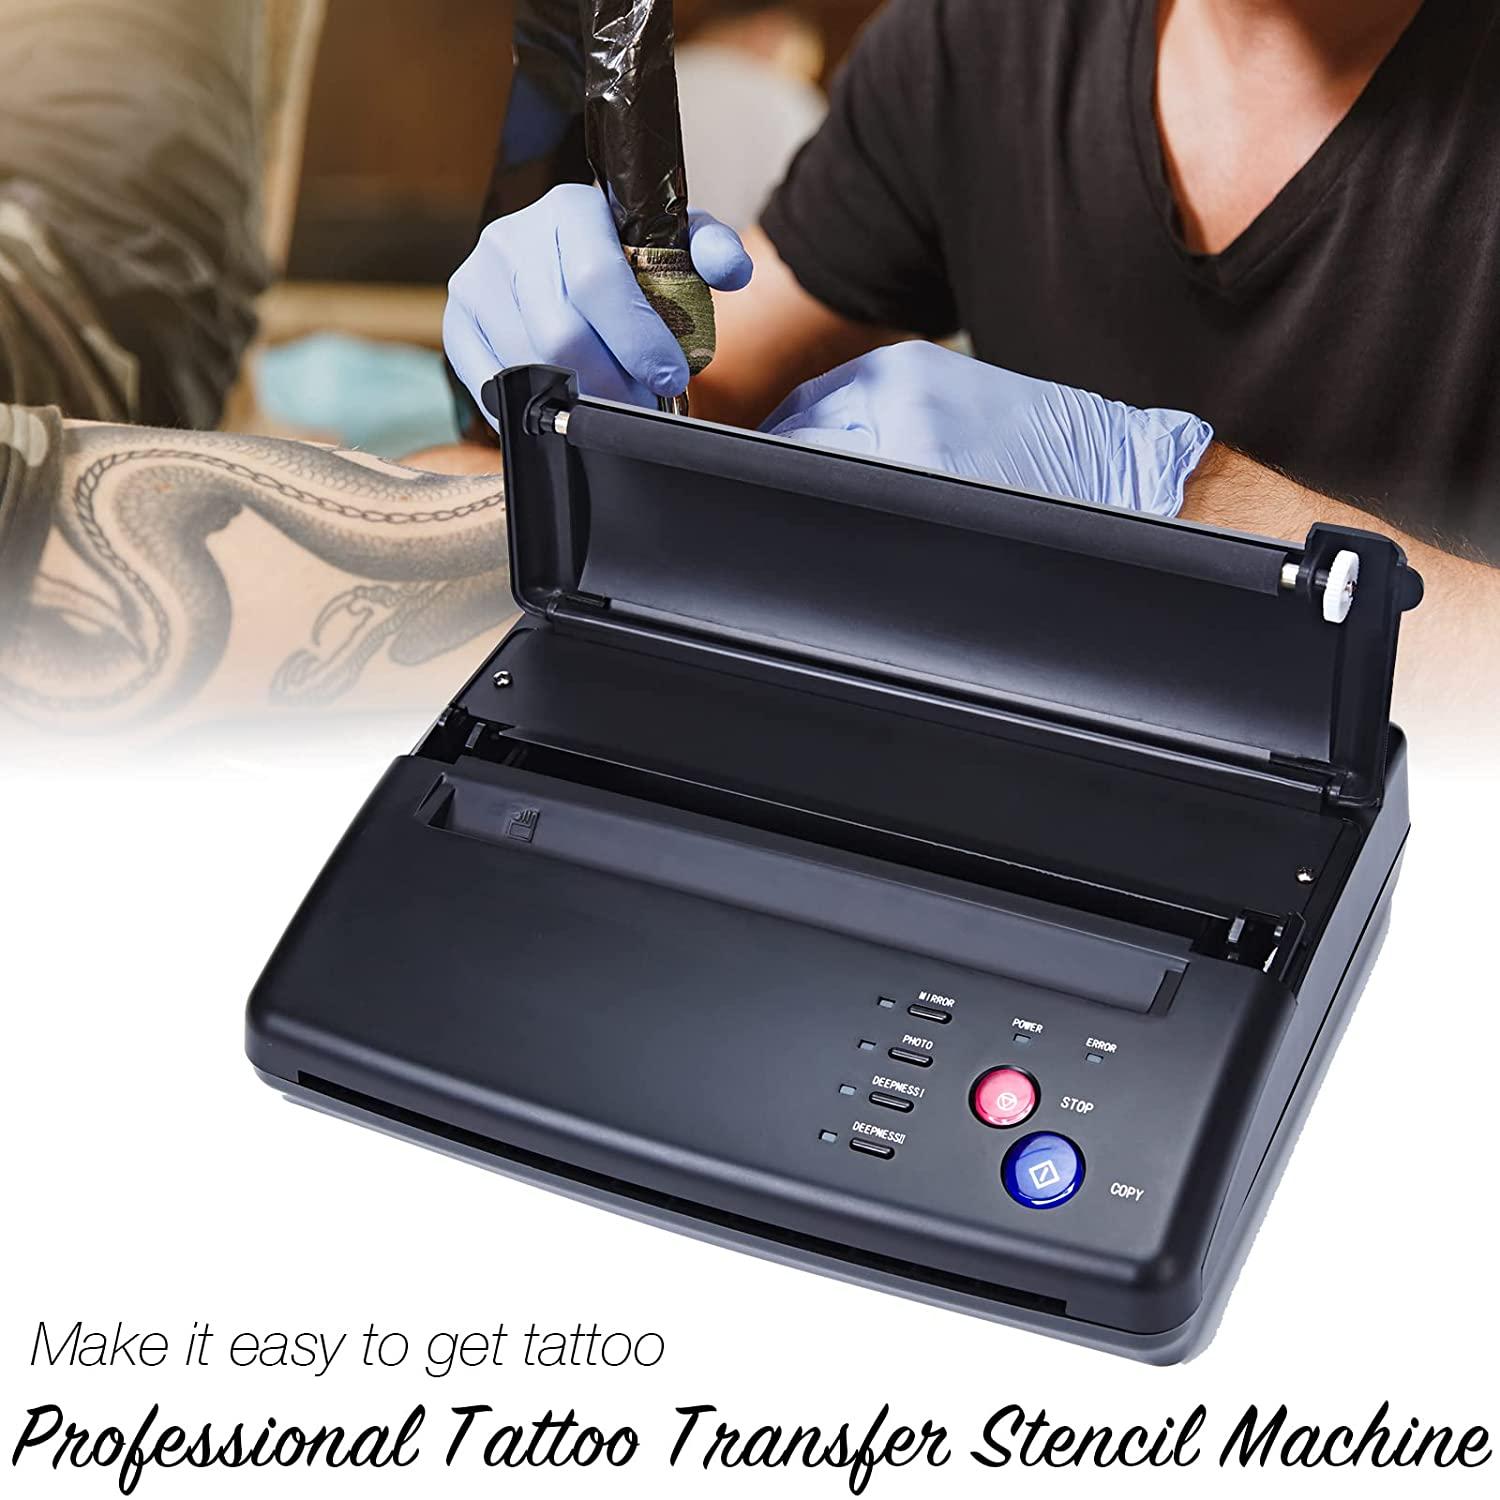 Wireless Bluetooth Tattoo Printer | Ultimate Tattoo Supply